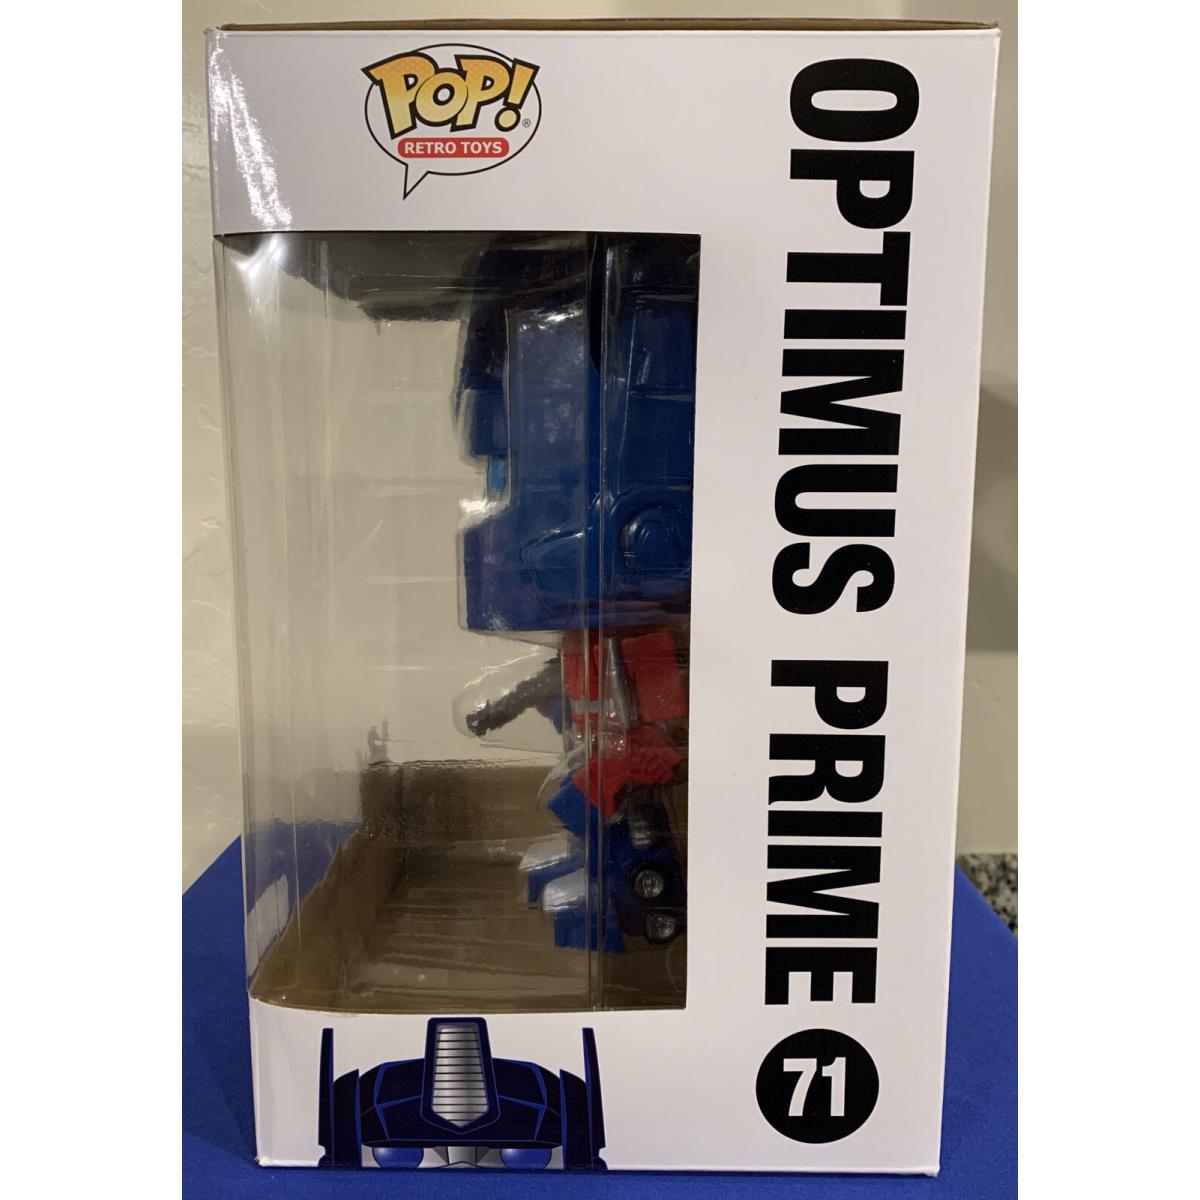 Funko Pop Retro Toys G1 Transformers Optimus Prime 71 Walmart Exclusive 2021